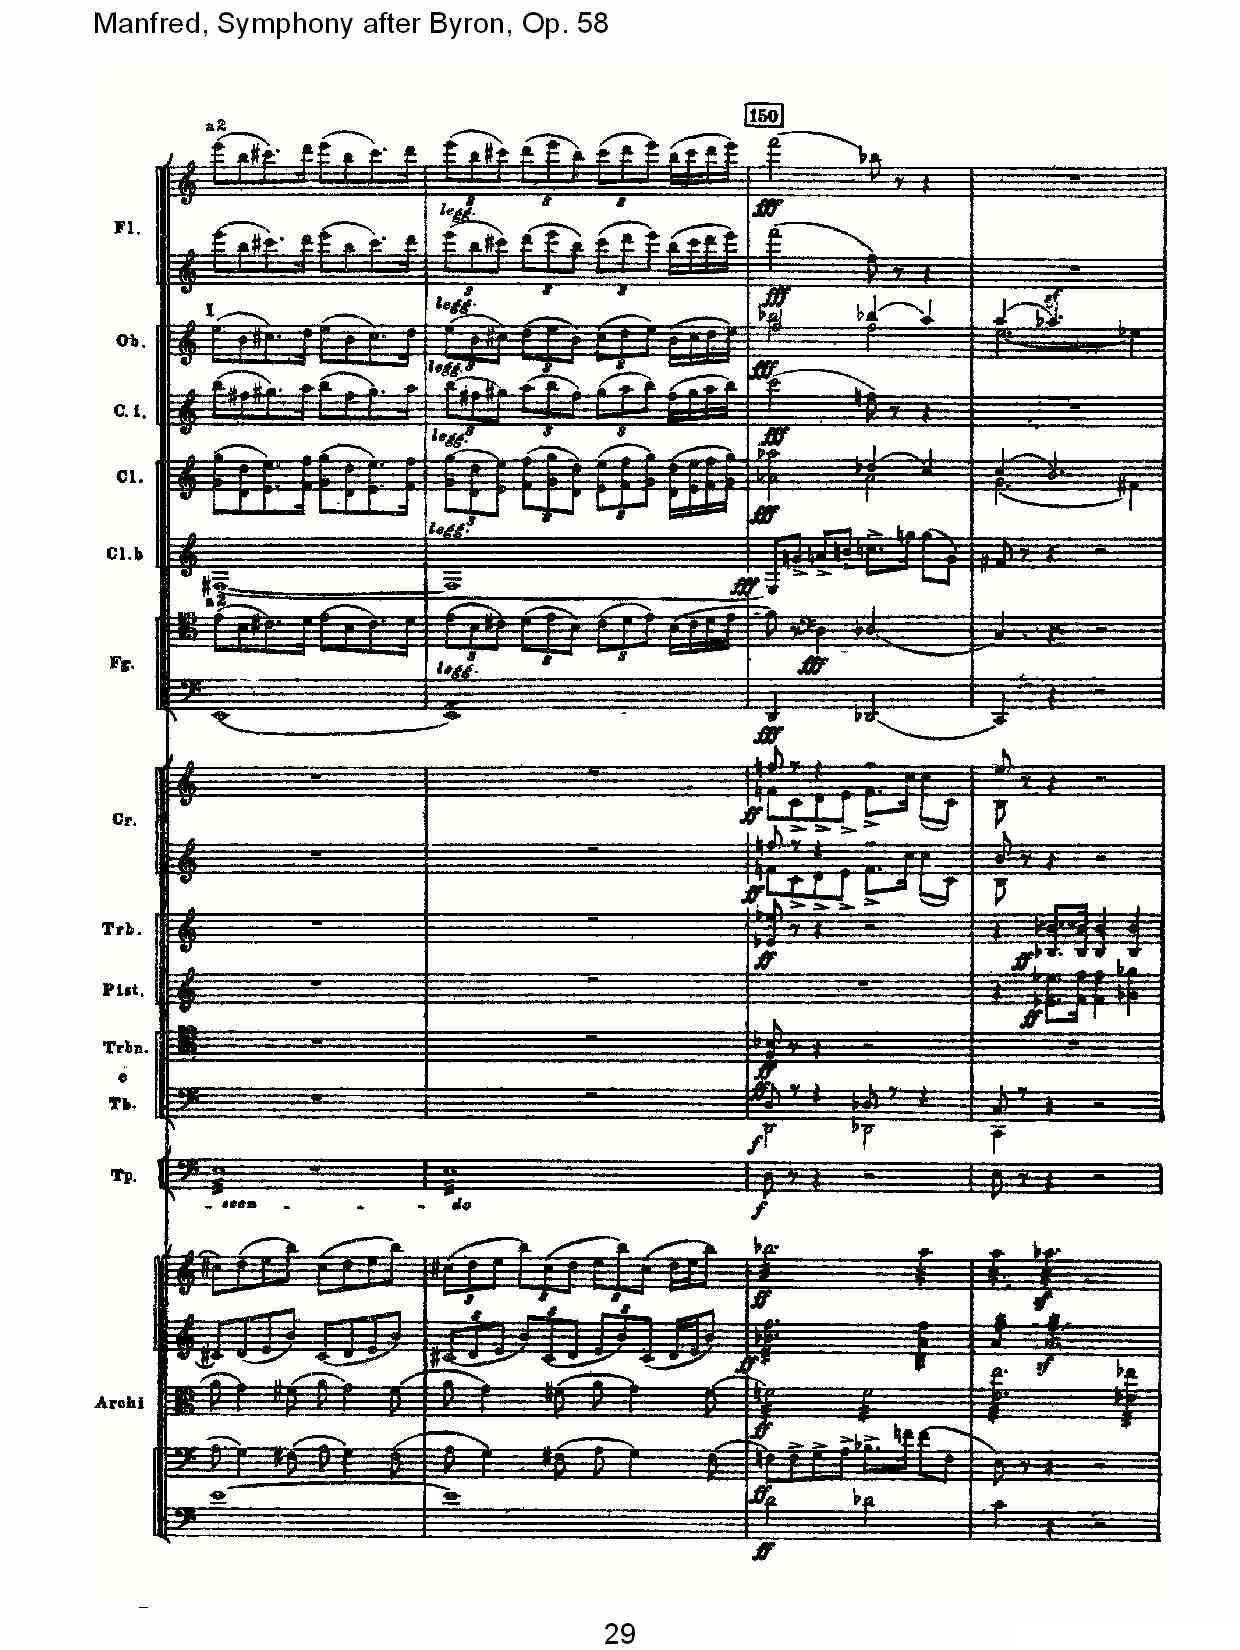 Manfred, Symphony after Byron, Op.58第一乐章（一）其它曲谱（图29）